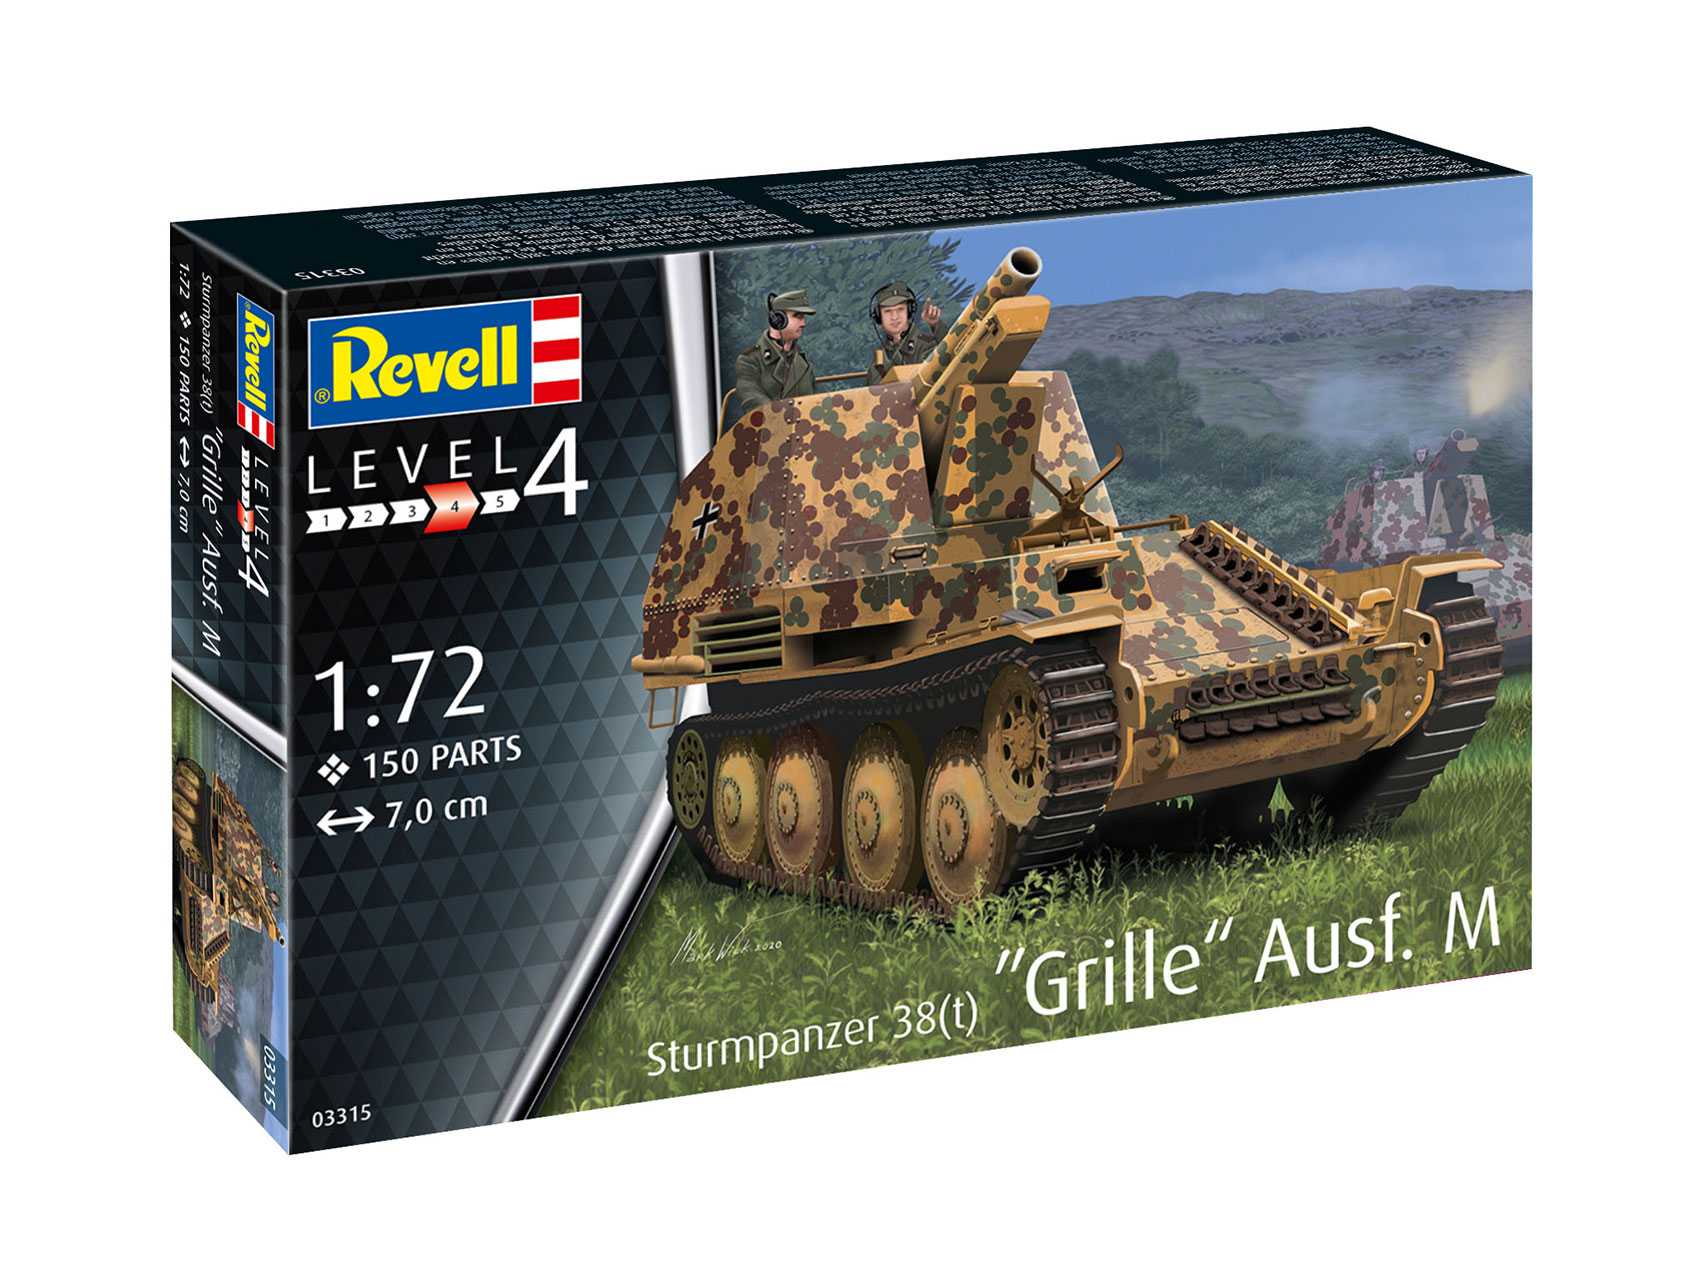 Revell 03315 - Sturmpanzer 38(t) Grille Ausf. M (1:72)